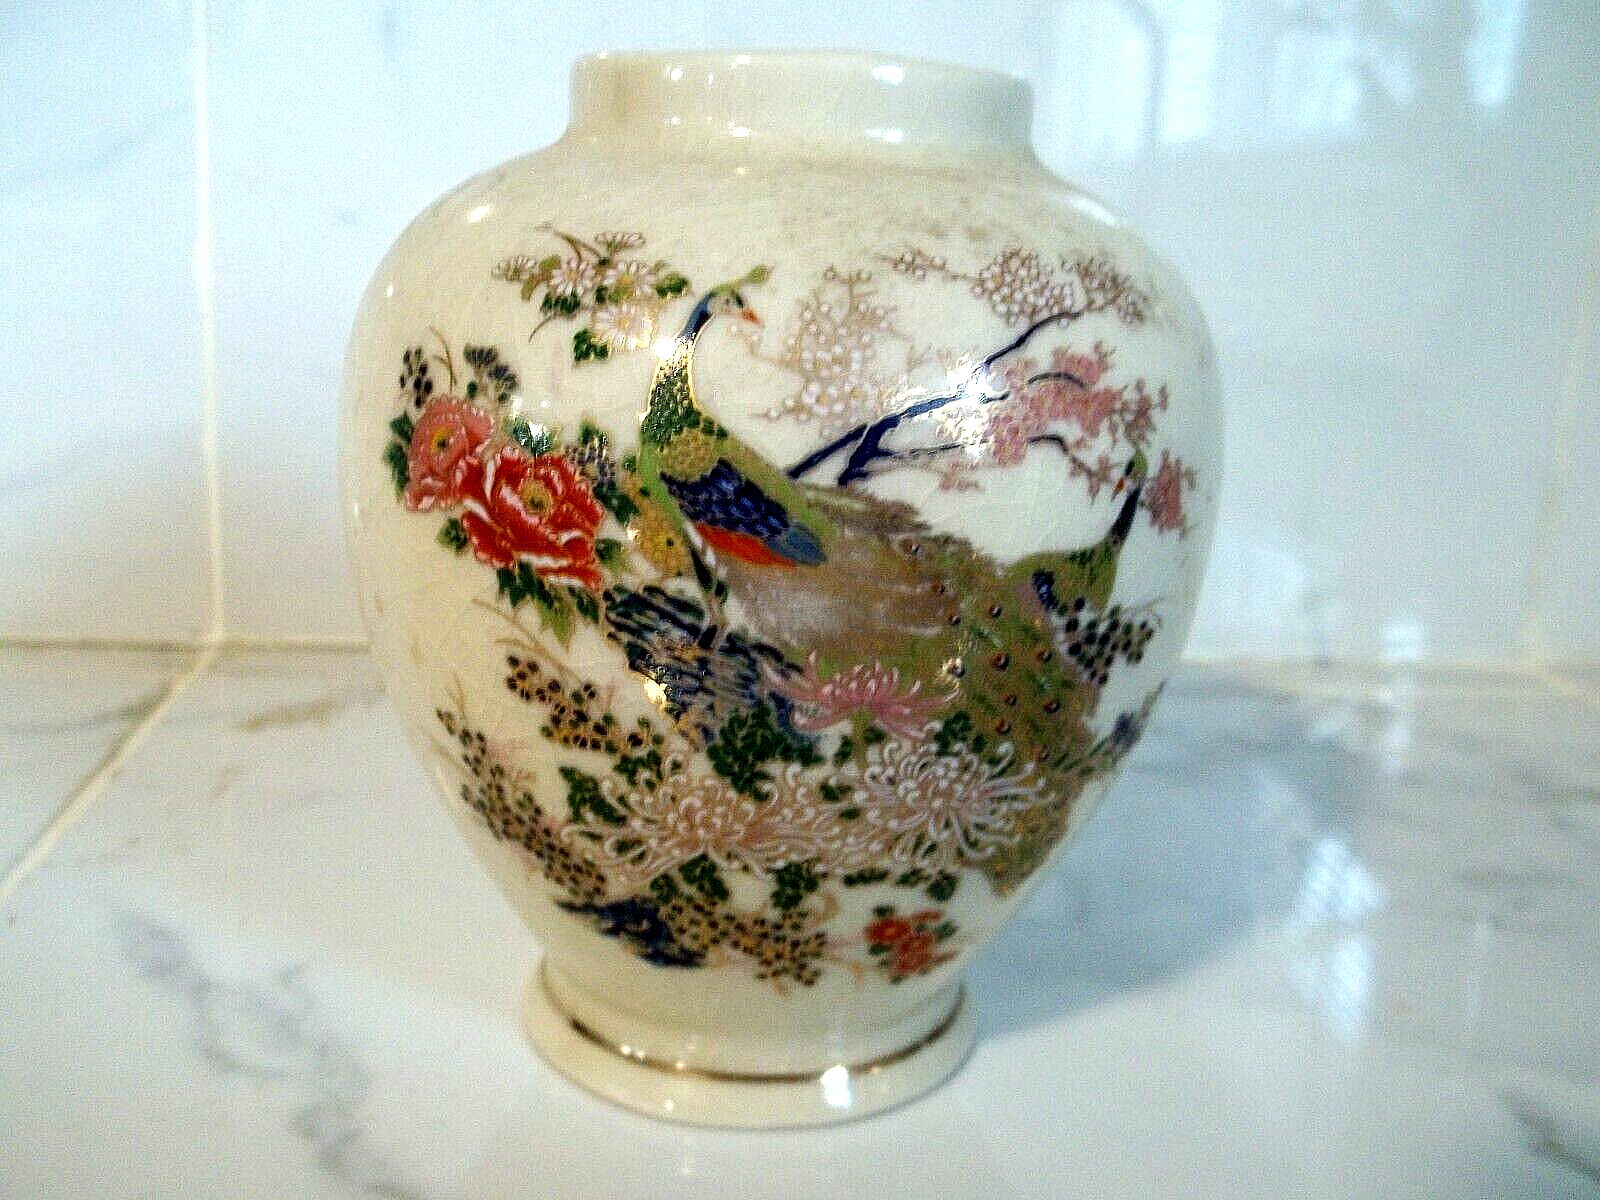 ASAHI Japan Porcelain Vase, Peacock Design, Cream Color